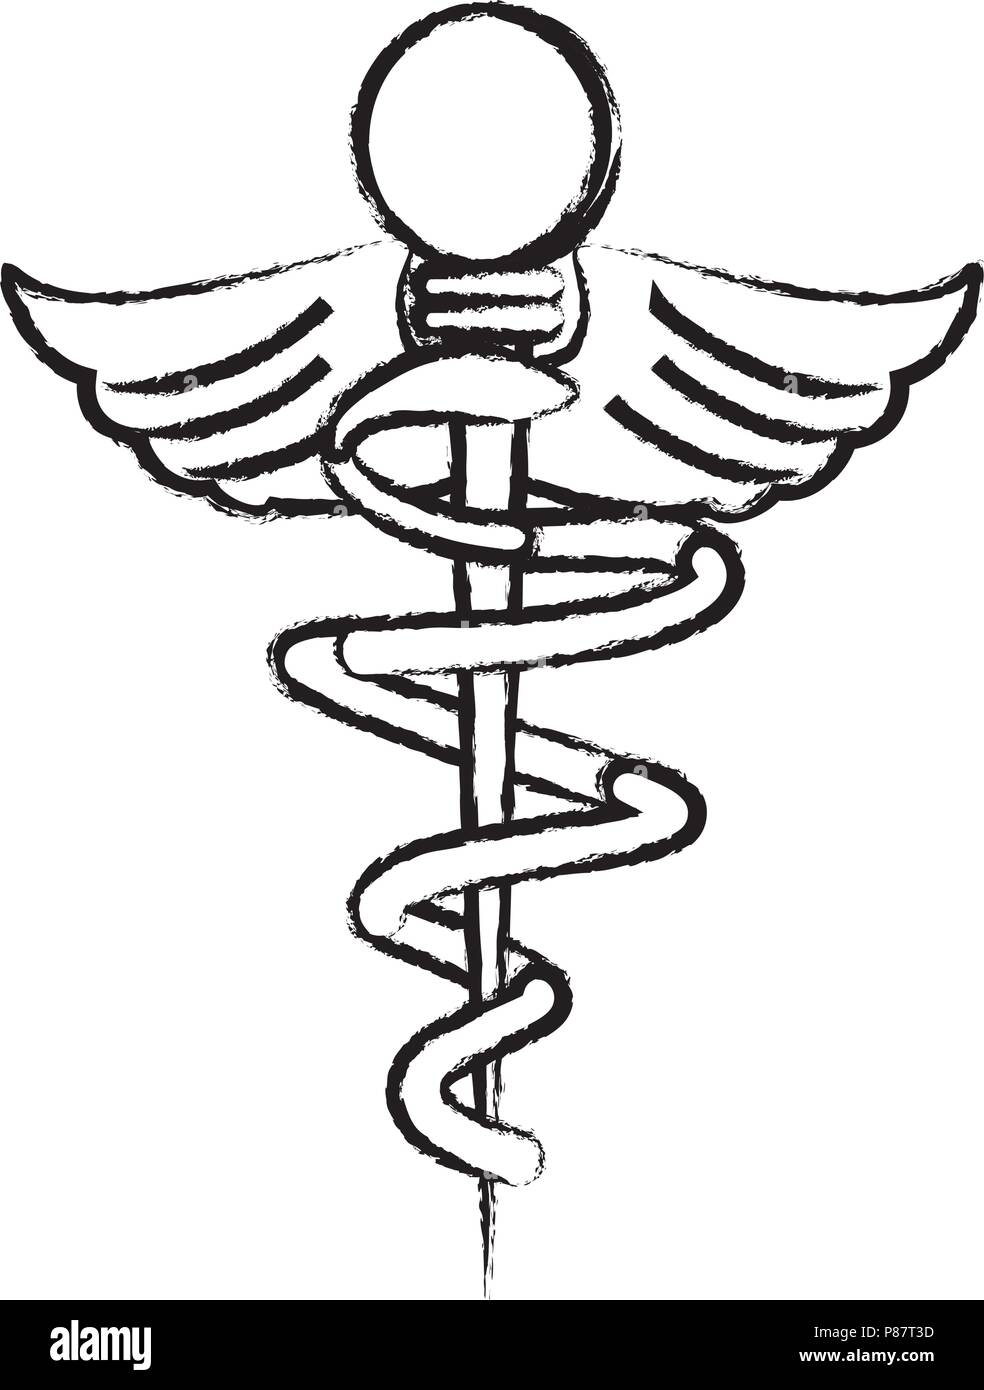 Caduceus Symbol Medical drawing free image download